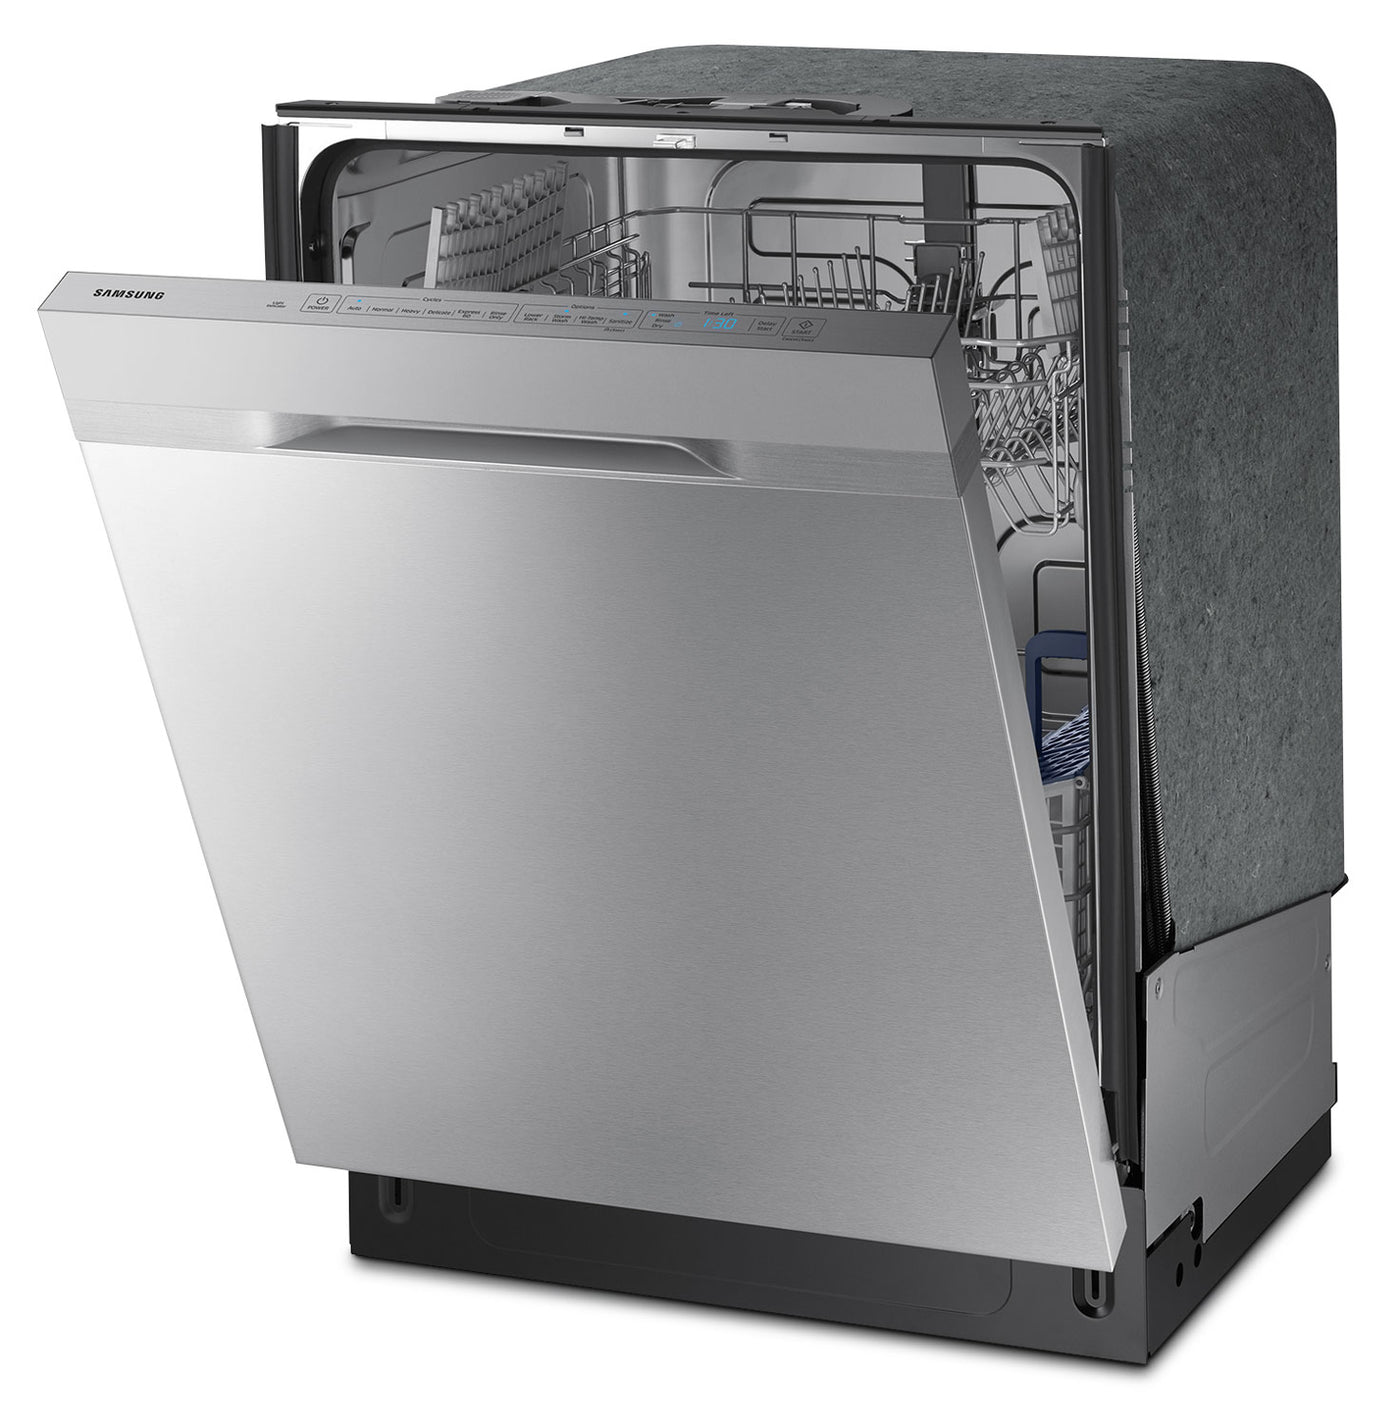 Samsung Stainless Steel 24" Dishwasher - DW80K5050US/AC